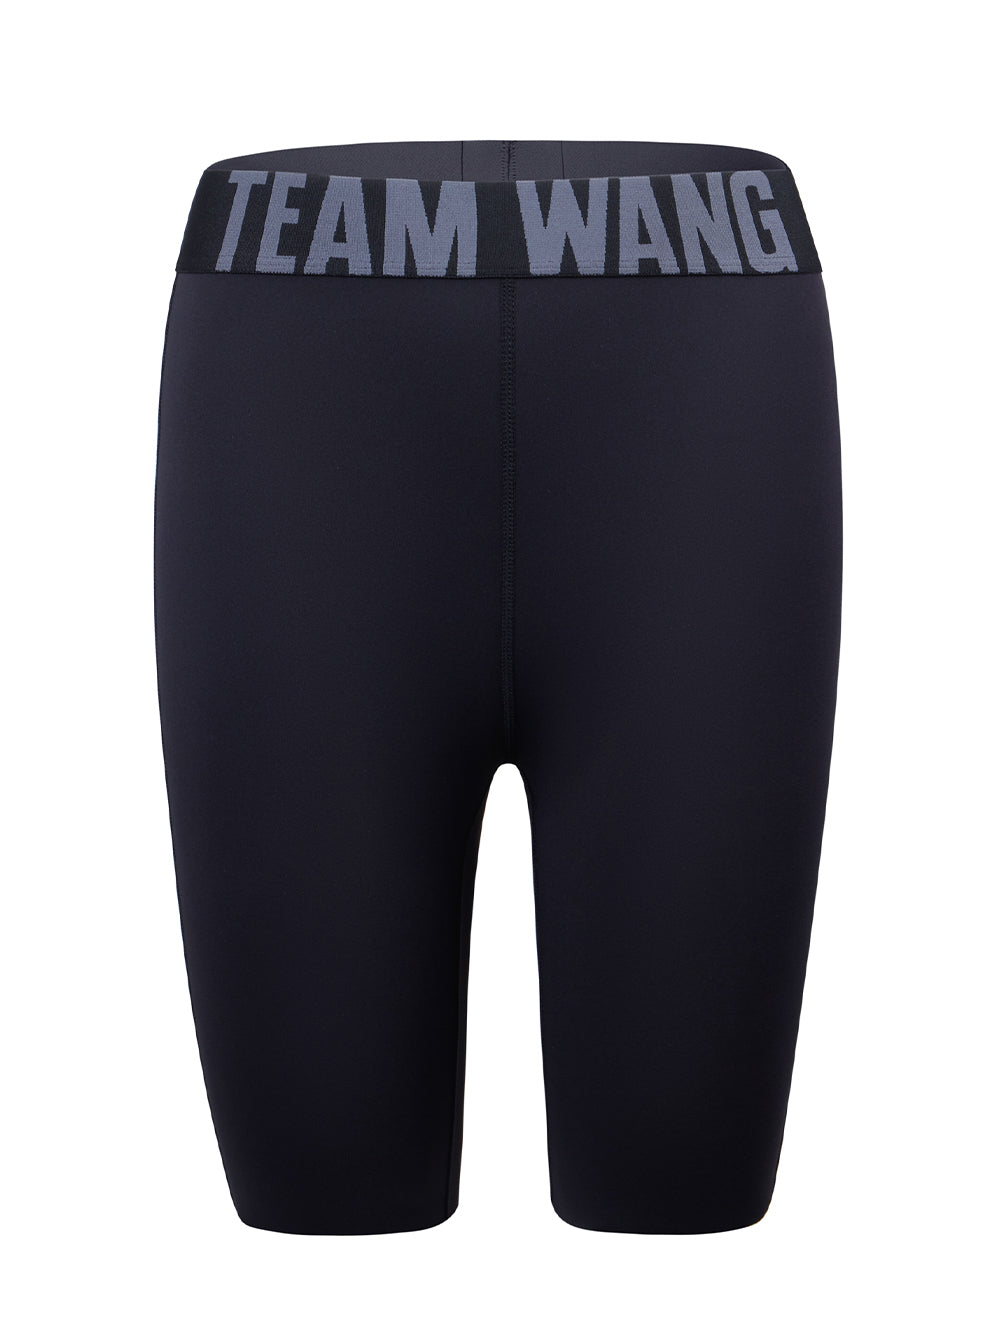 Team-Wang-Design-THE-ORIGINAL-1-Biker-Shorts-Black-1